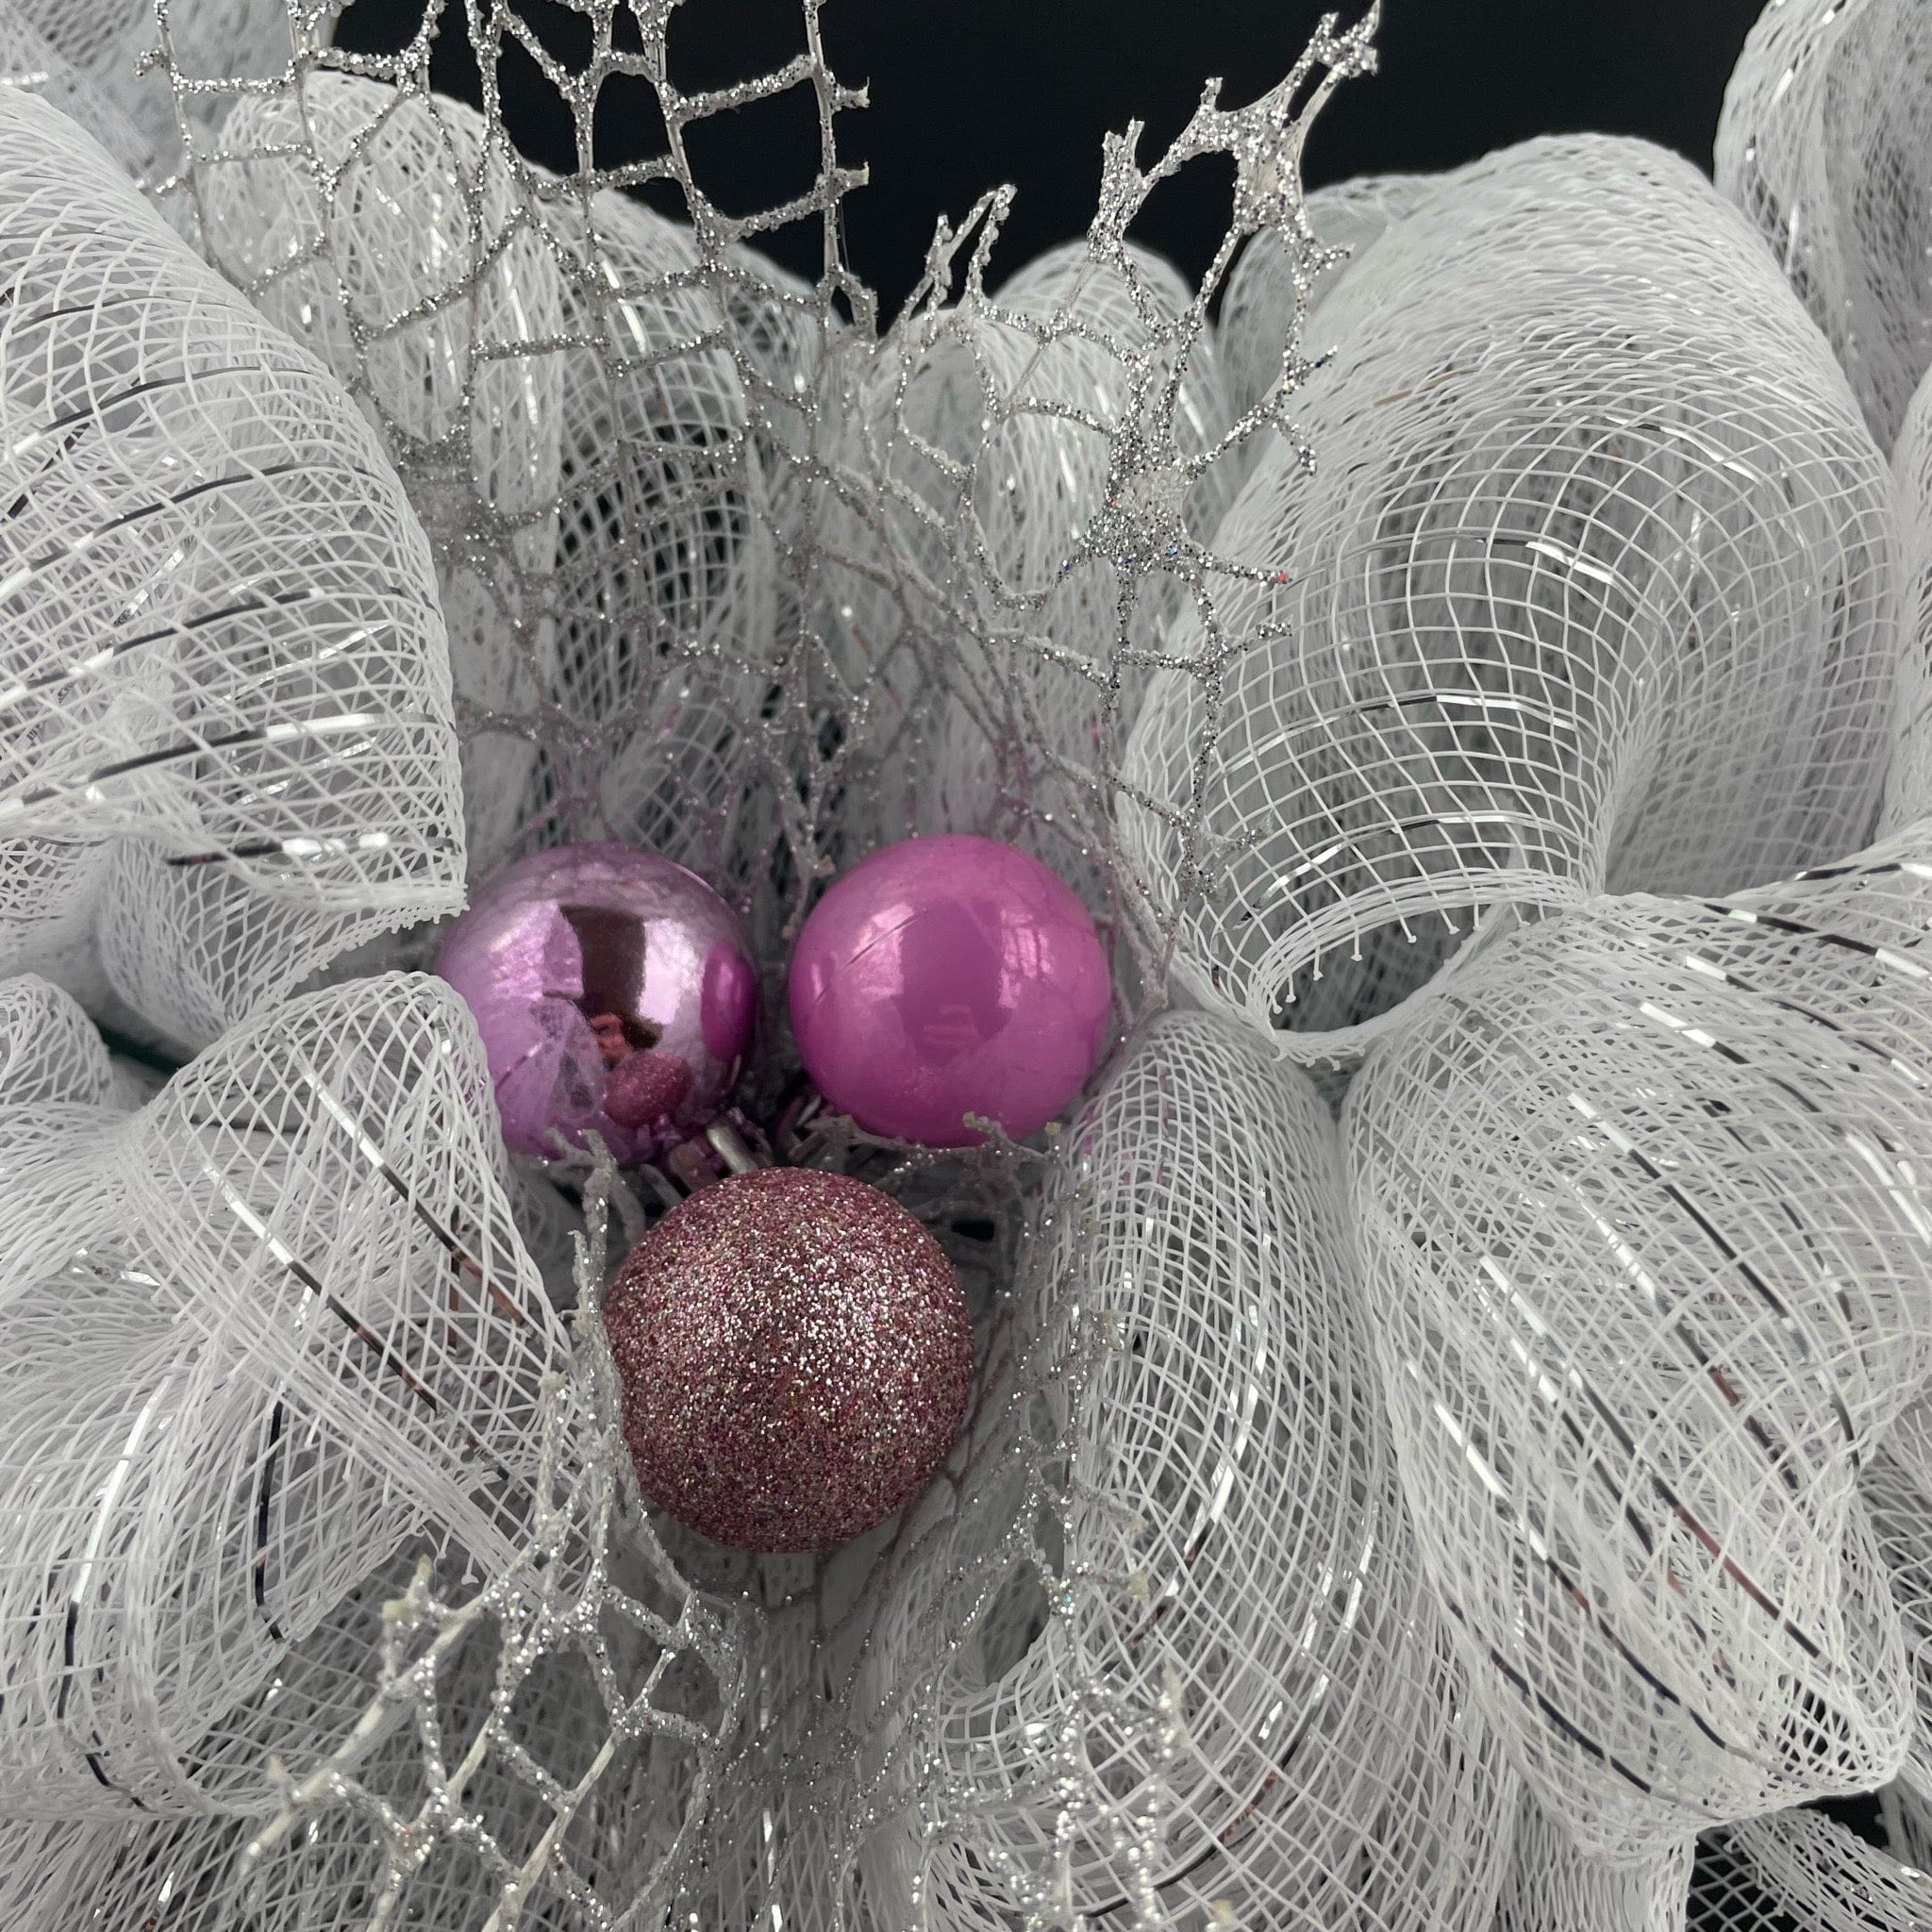 Ribbonly Kits Luscious Lilac 18" Deco Mesh Wreath Kit